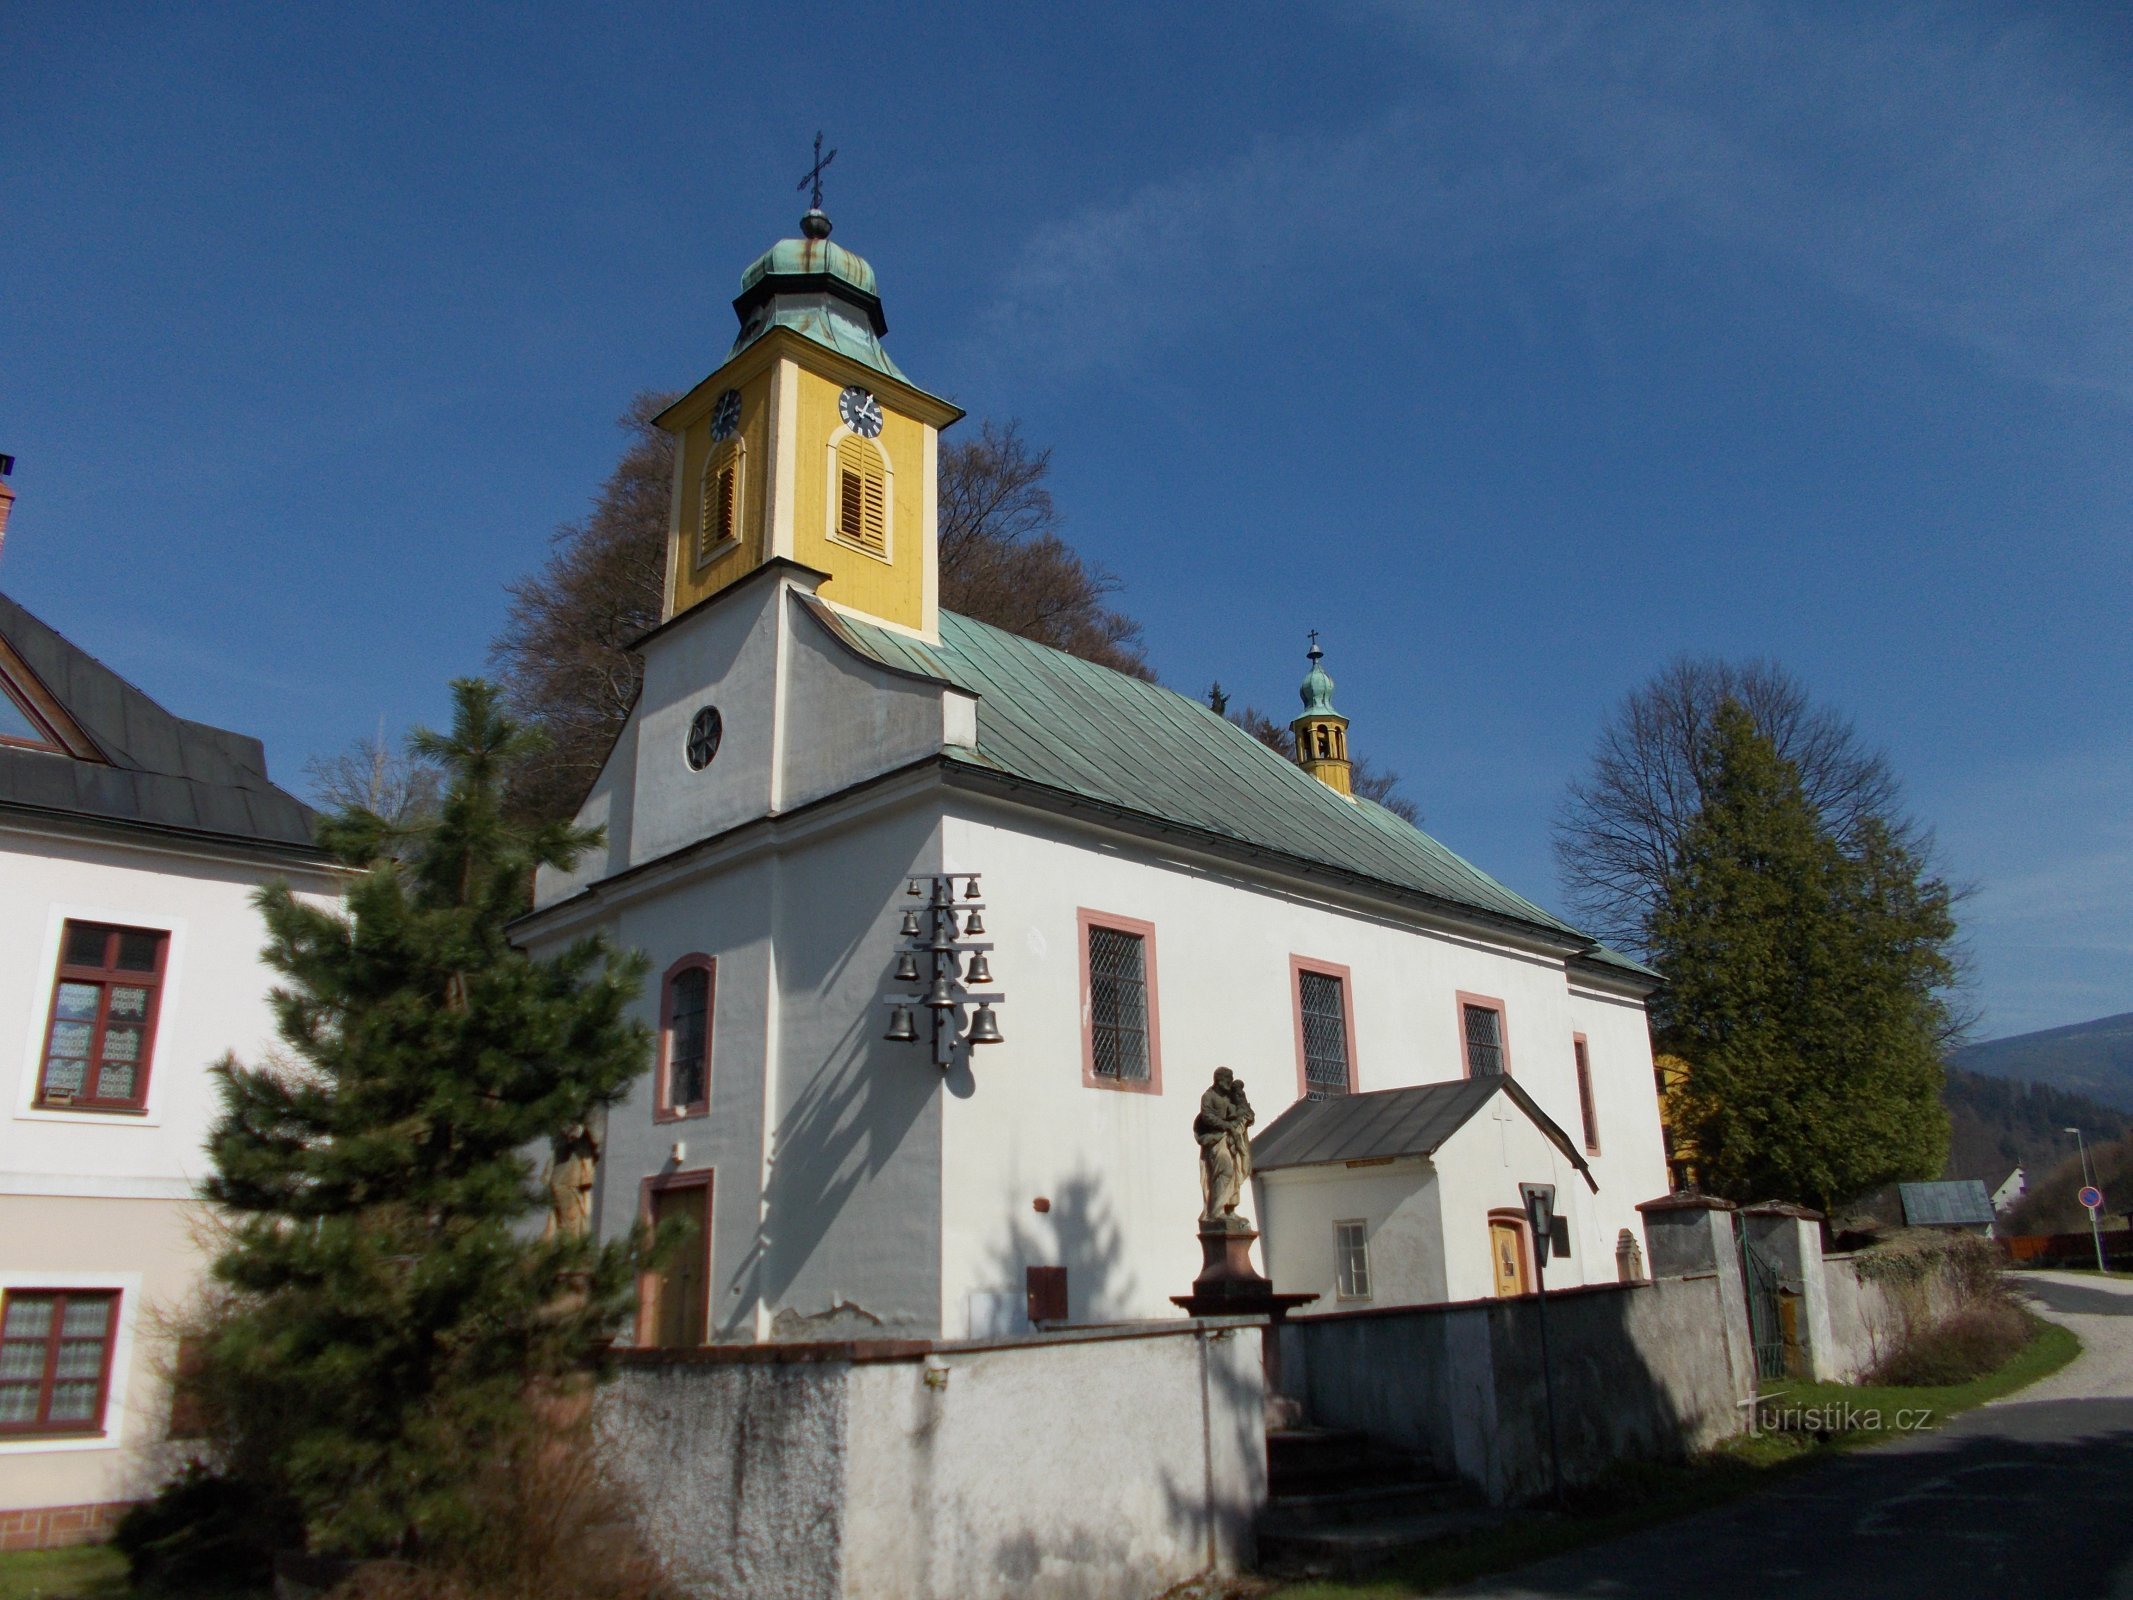 Dolní Dvůr - Pyhän Nikolauksen kirkko. Joseph